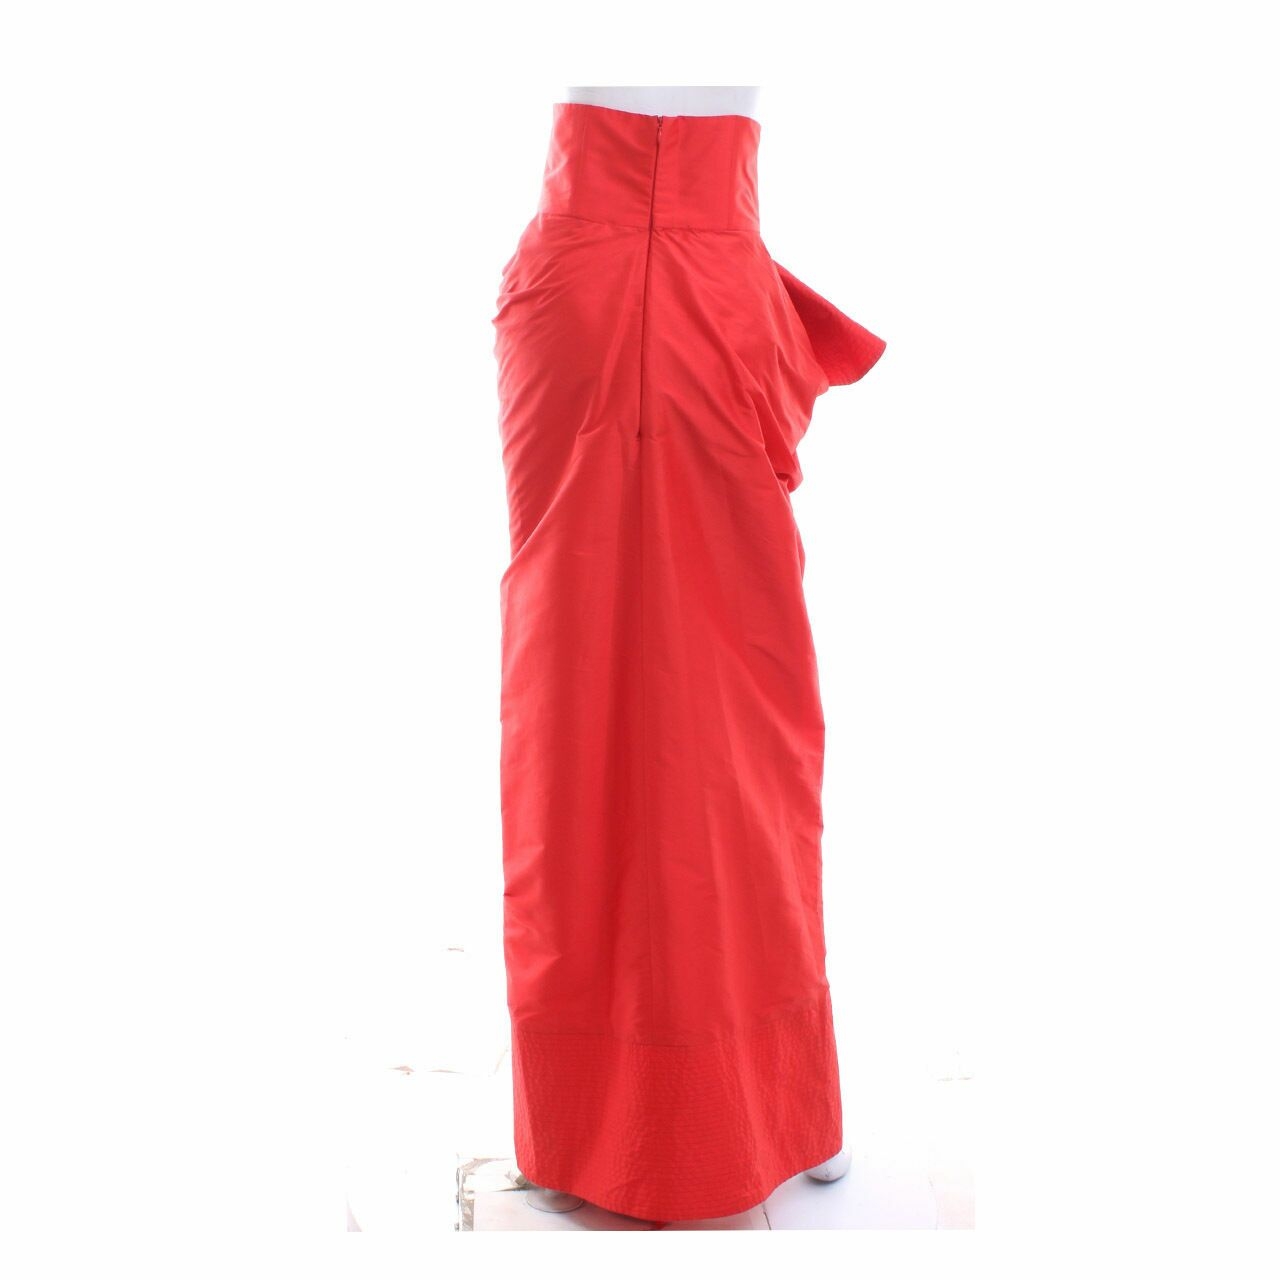 Sapto Djojokartiko Red Ruffle Maxi Skirt